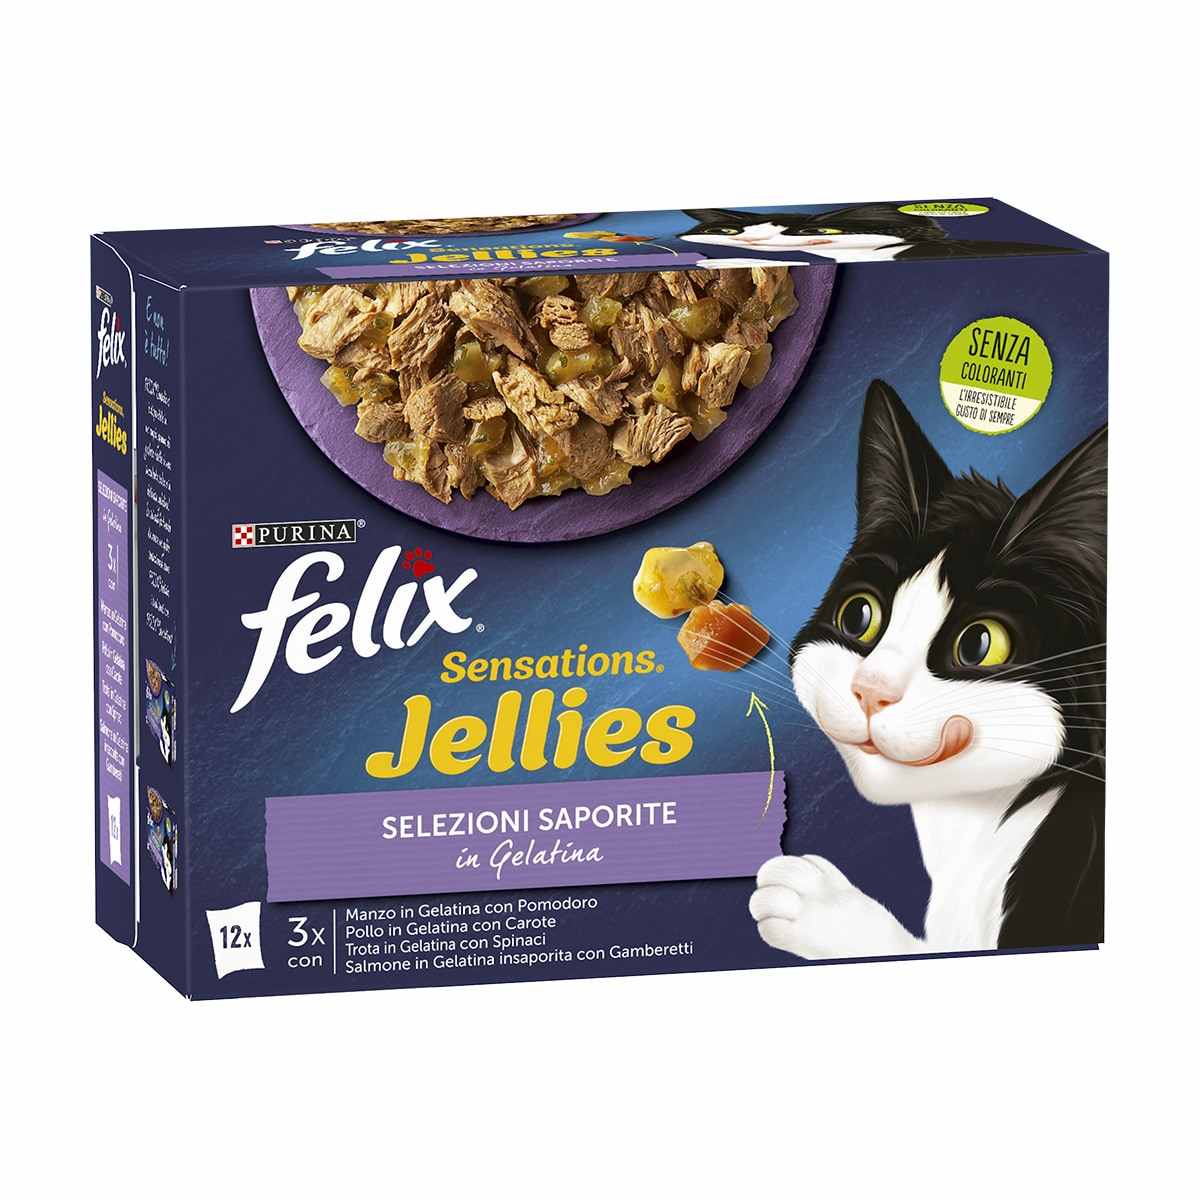 Felix Sensation Jellies Selezioni Saporite